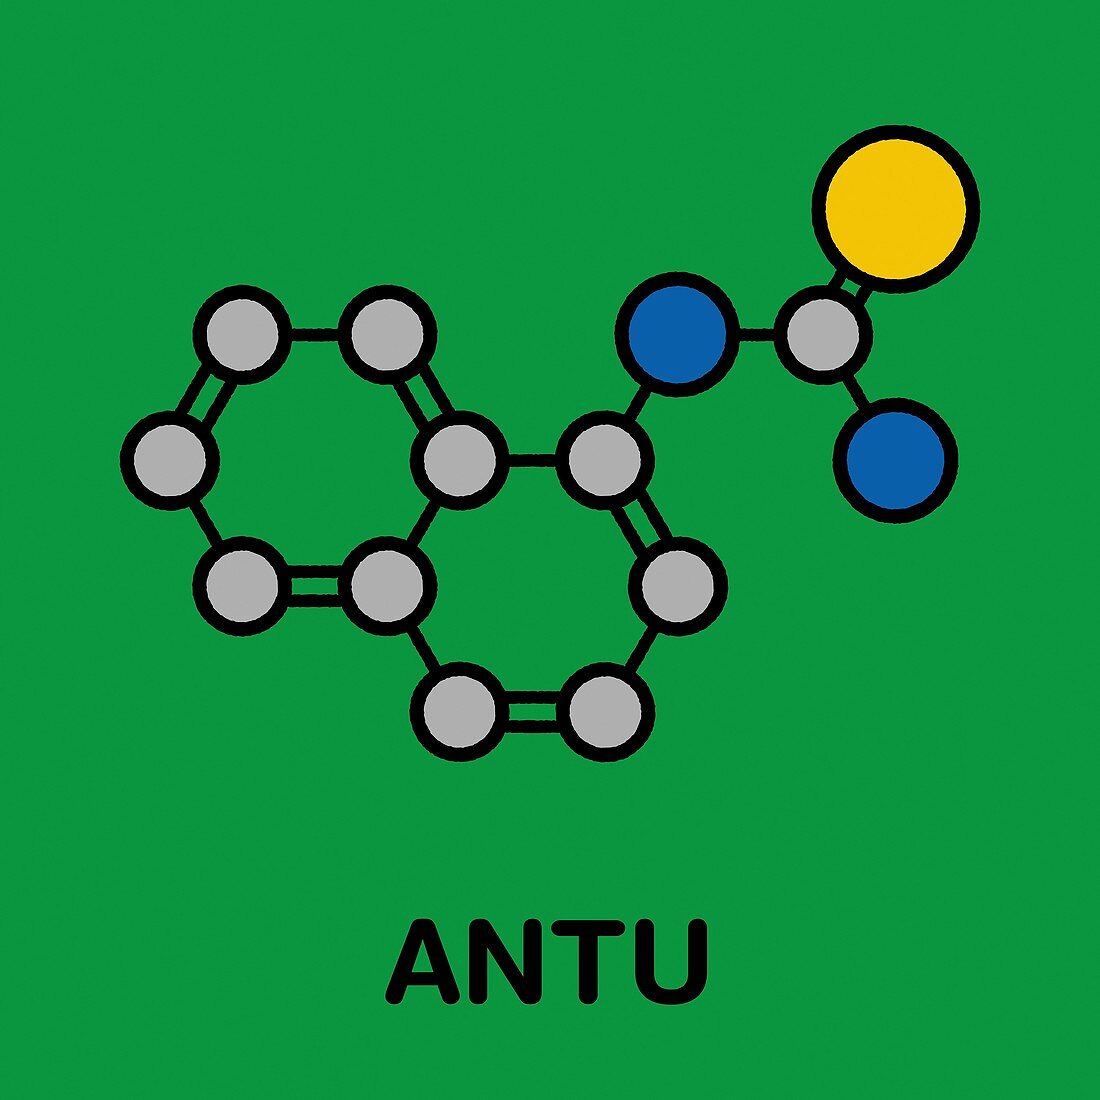 Alpha-naphthylthiourea rodenticide molecule, illustration